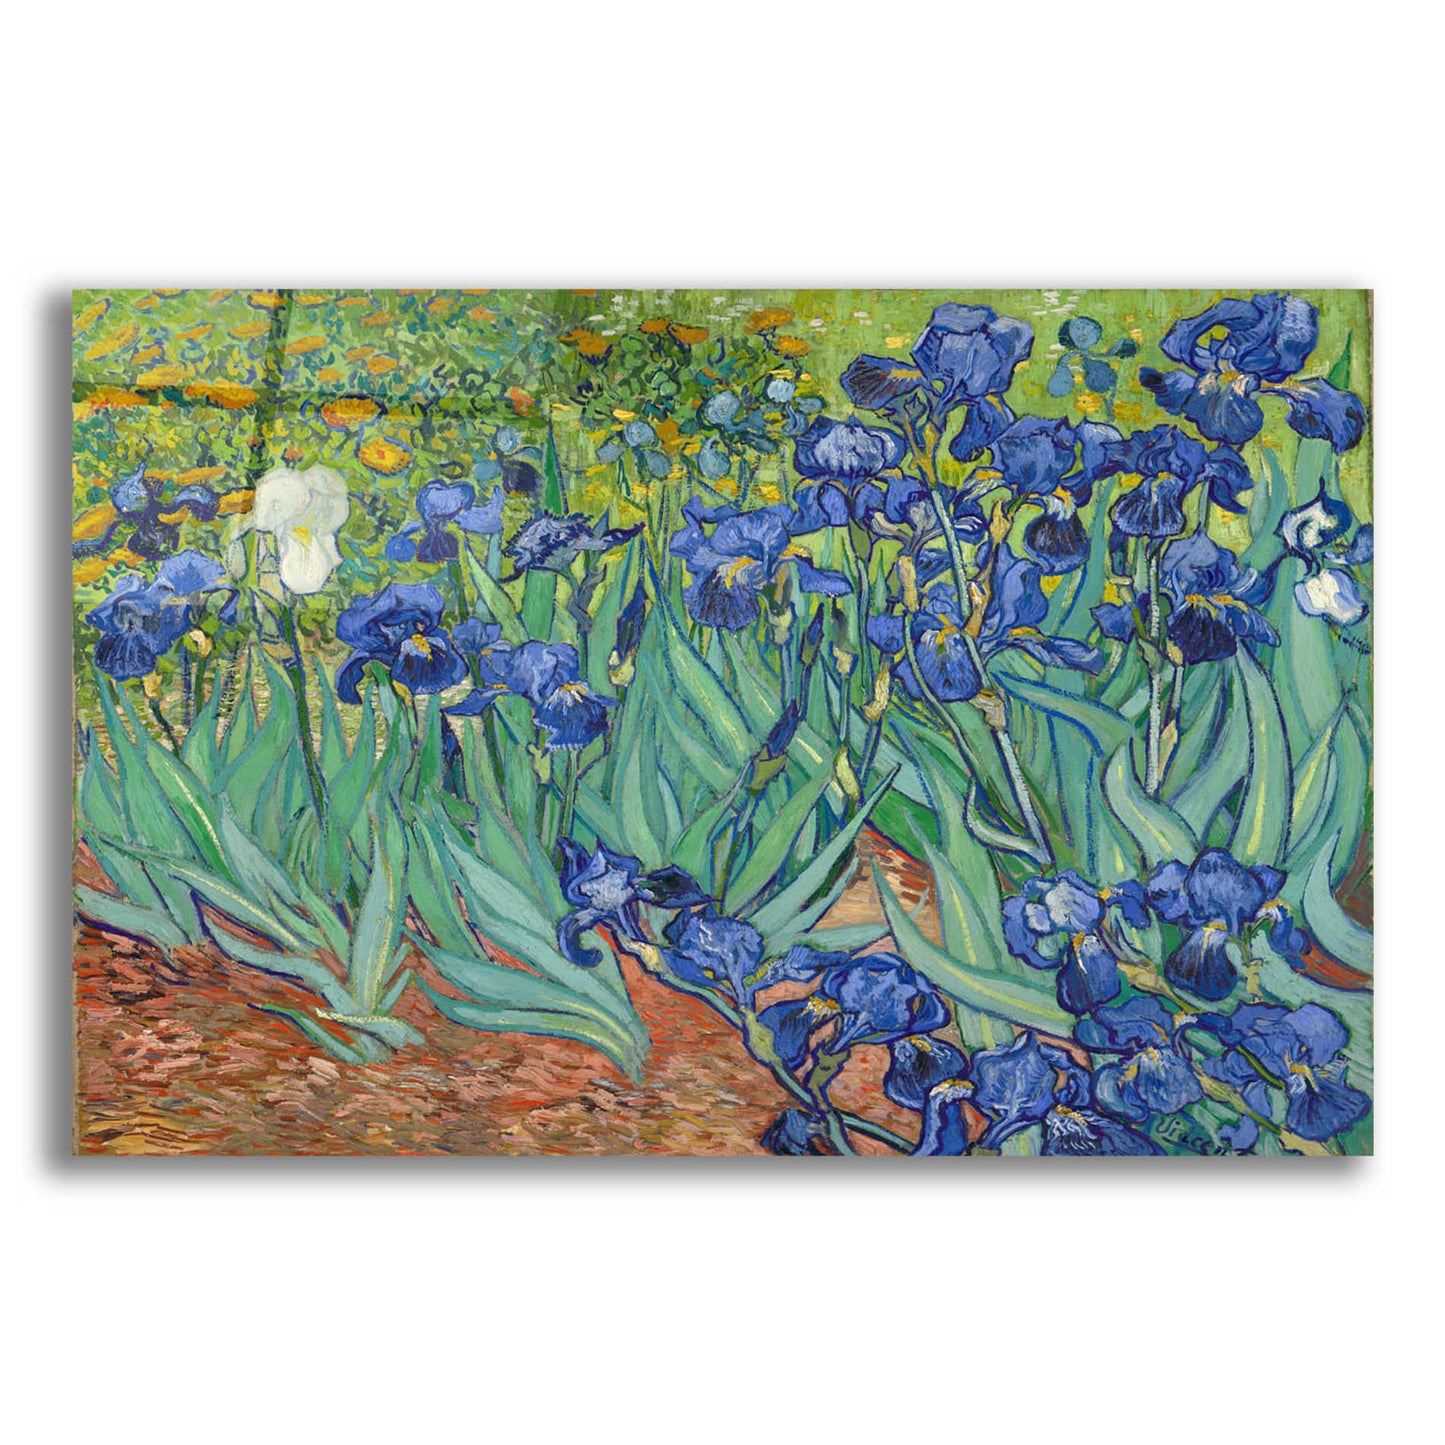 Epic Art 'Irises' by Vincent van Gogh, Acrylic Glass Wall Art,16x12x1.1x0,26x18x1.1x0,34x26x1.74x0,54x40x1.74x0